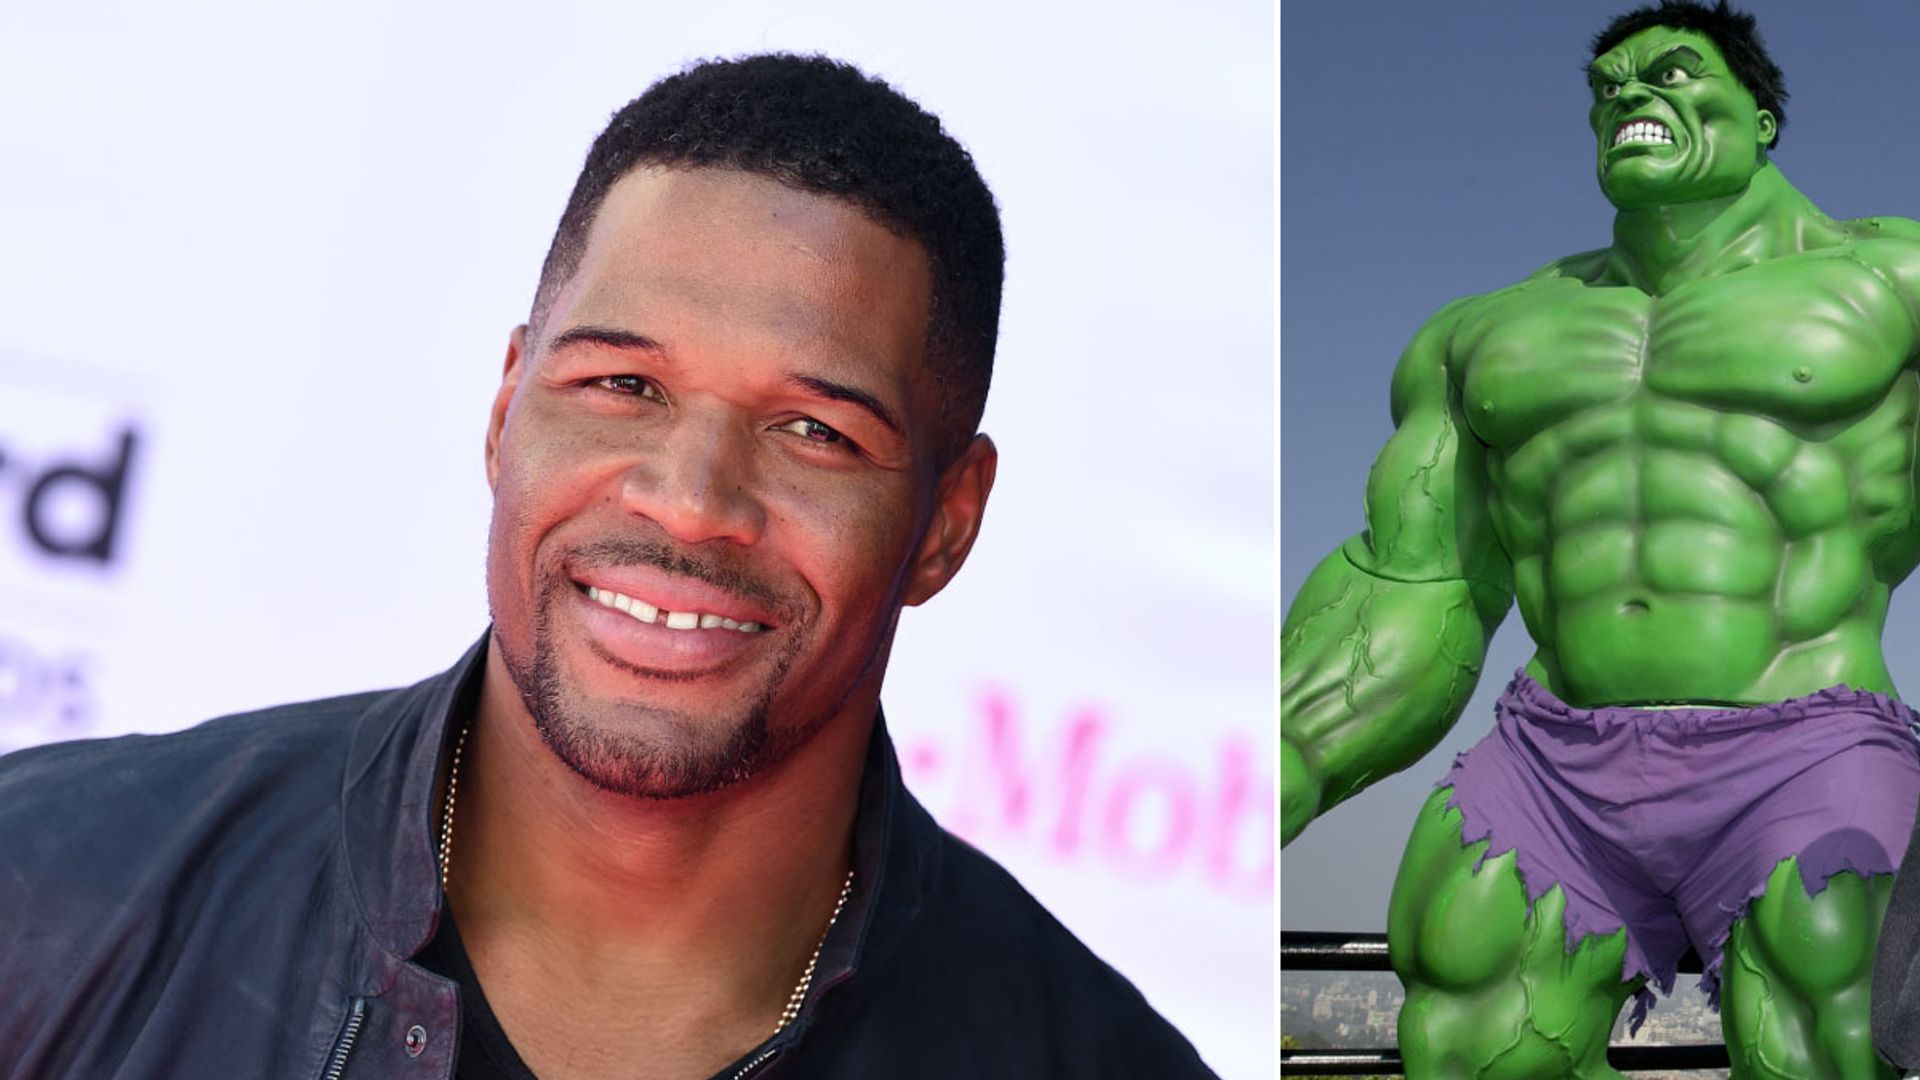 GMA's Michael Strahan shares shirtless photo - and he looks just like the Incredible Hulk